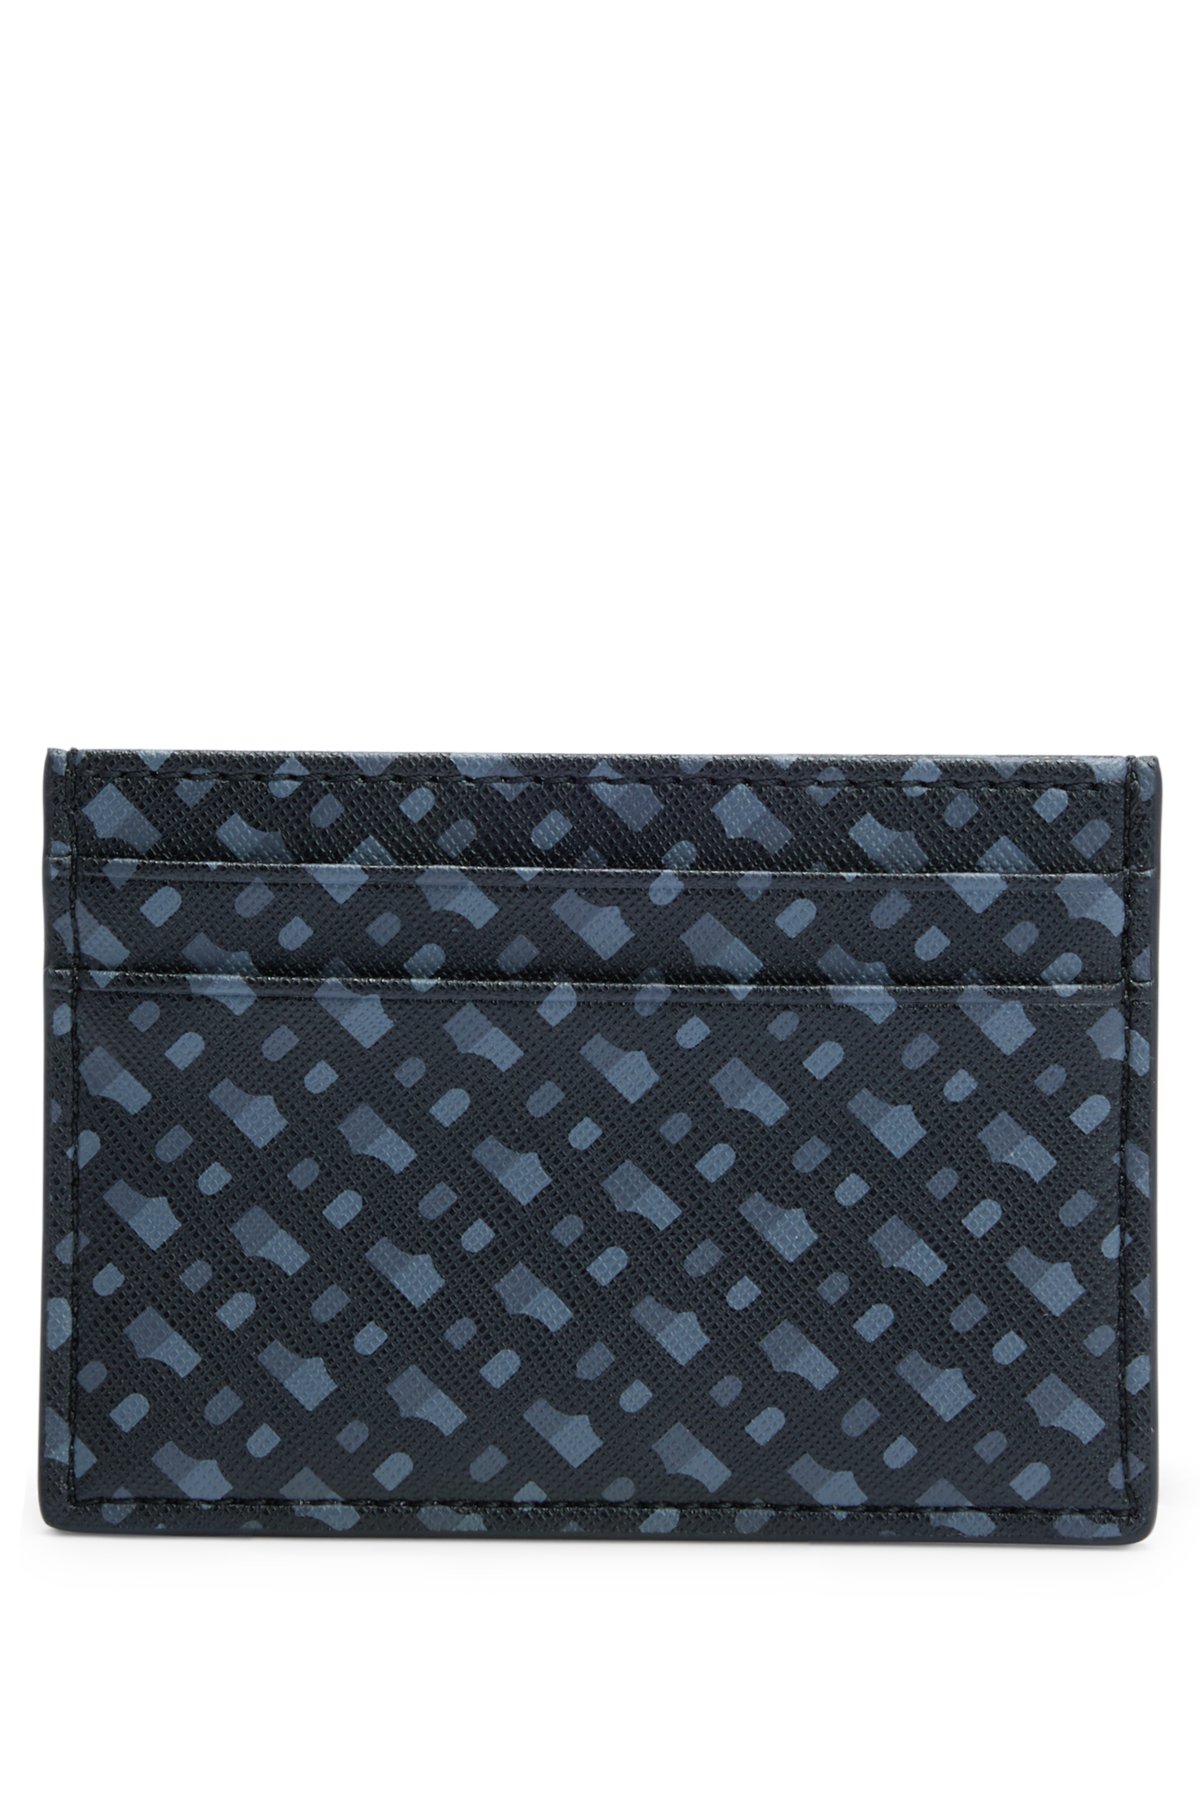 Louis Vuitton x NBA Pocket Organizer Blue Wallet